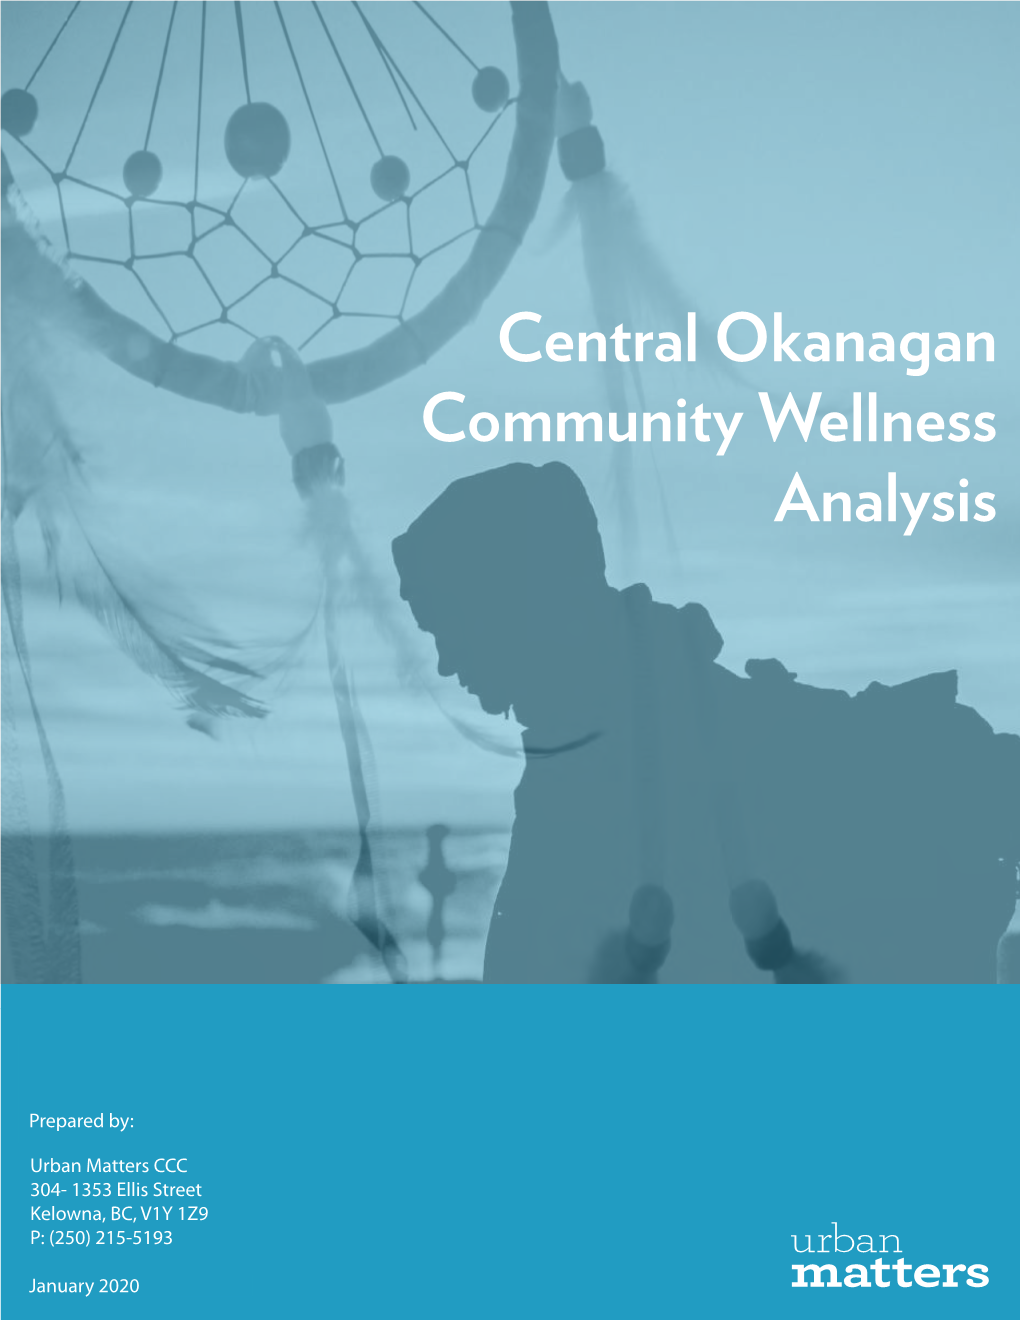 Central Okanagan Community Wellness Analysis